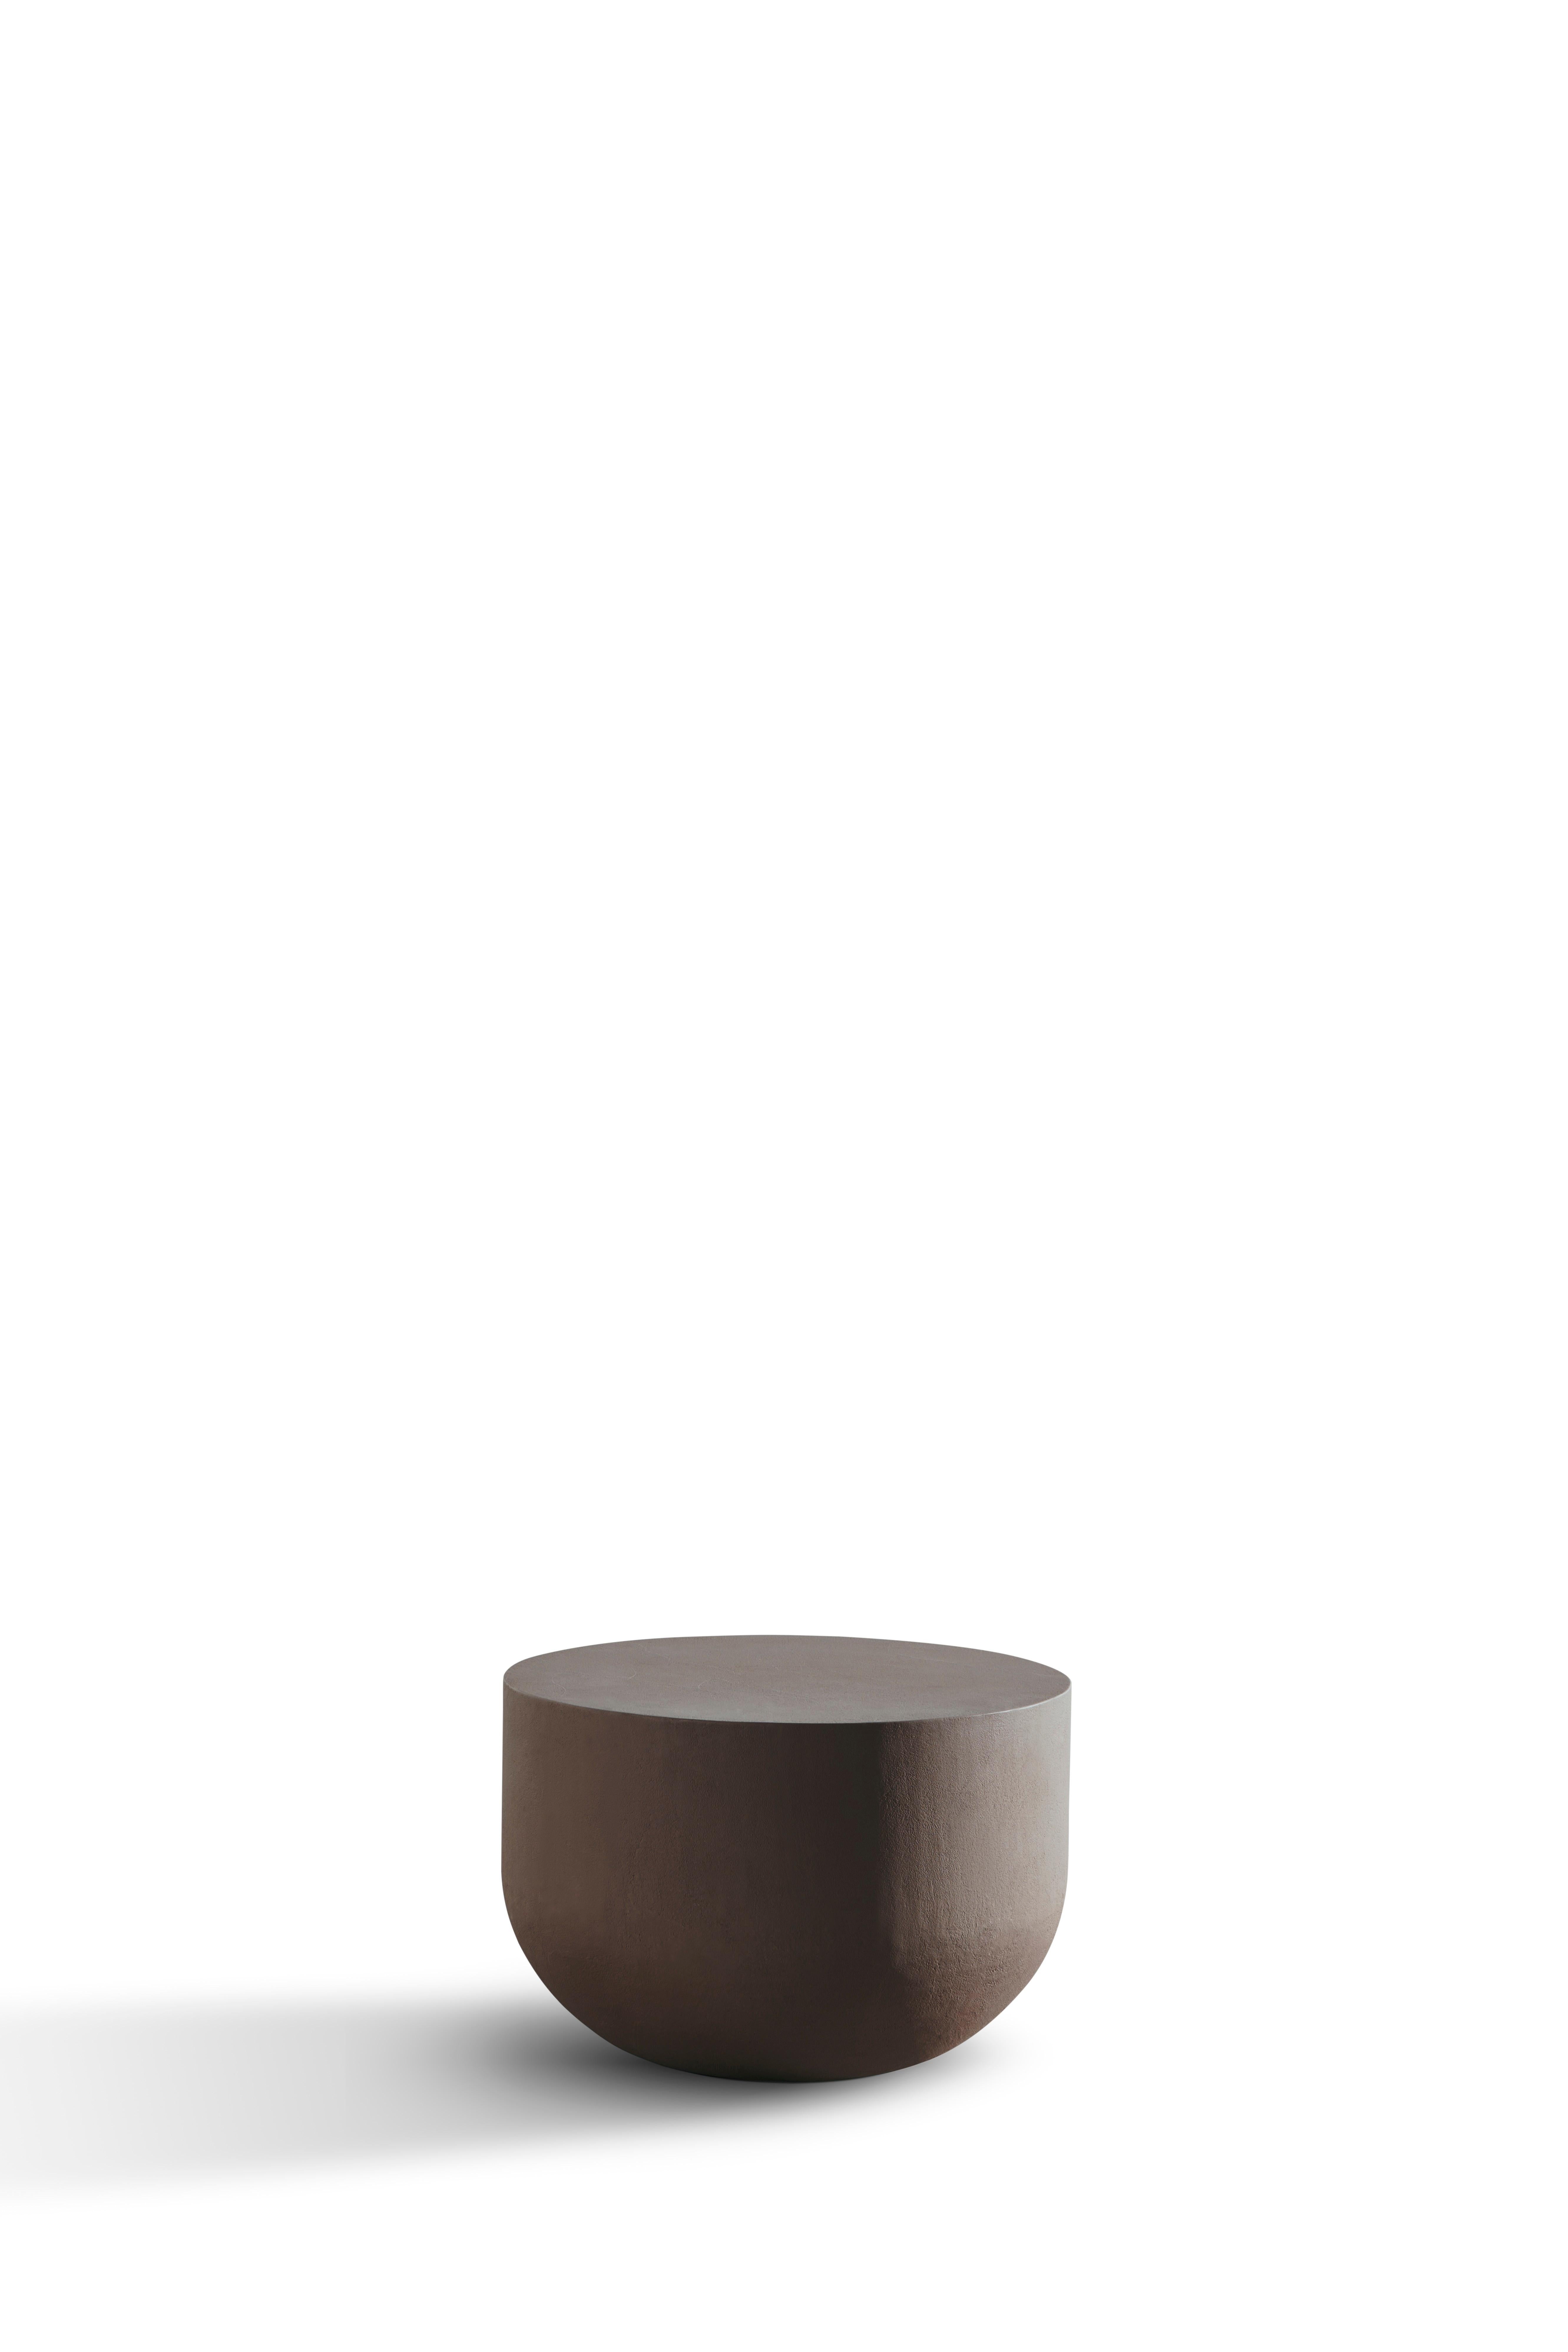 Contemporary Gervasoni Heiko 42 Side Table by David Lopez Quincoces For Sale